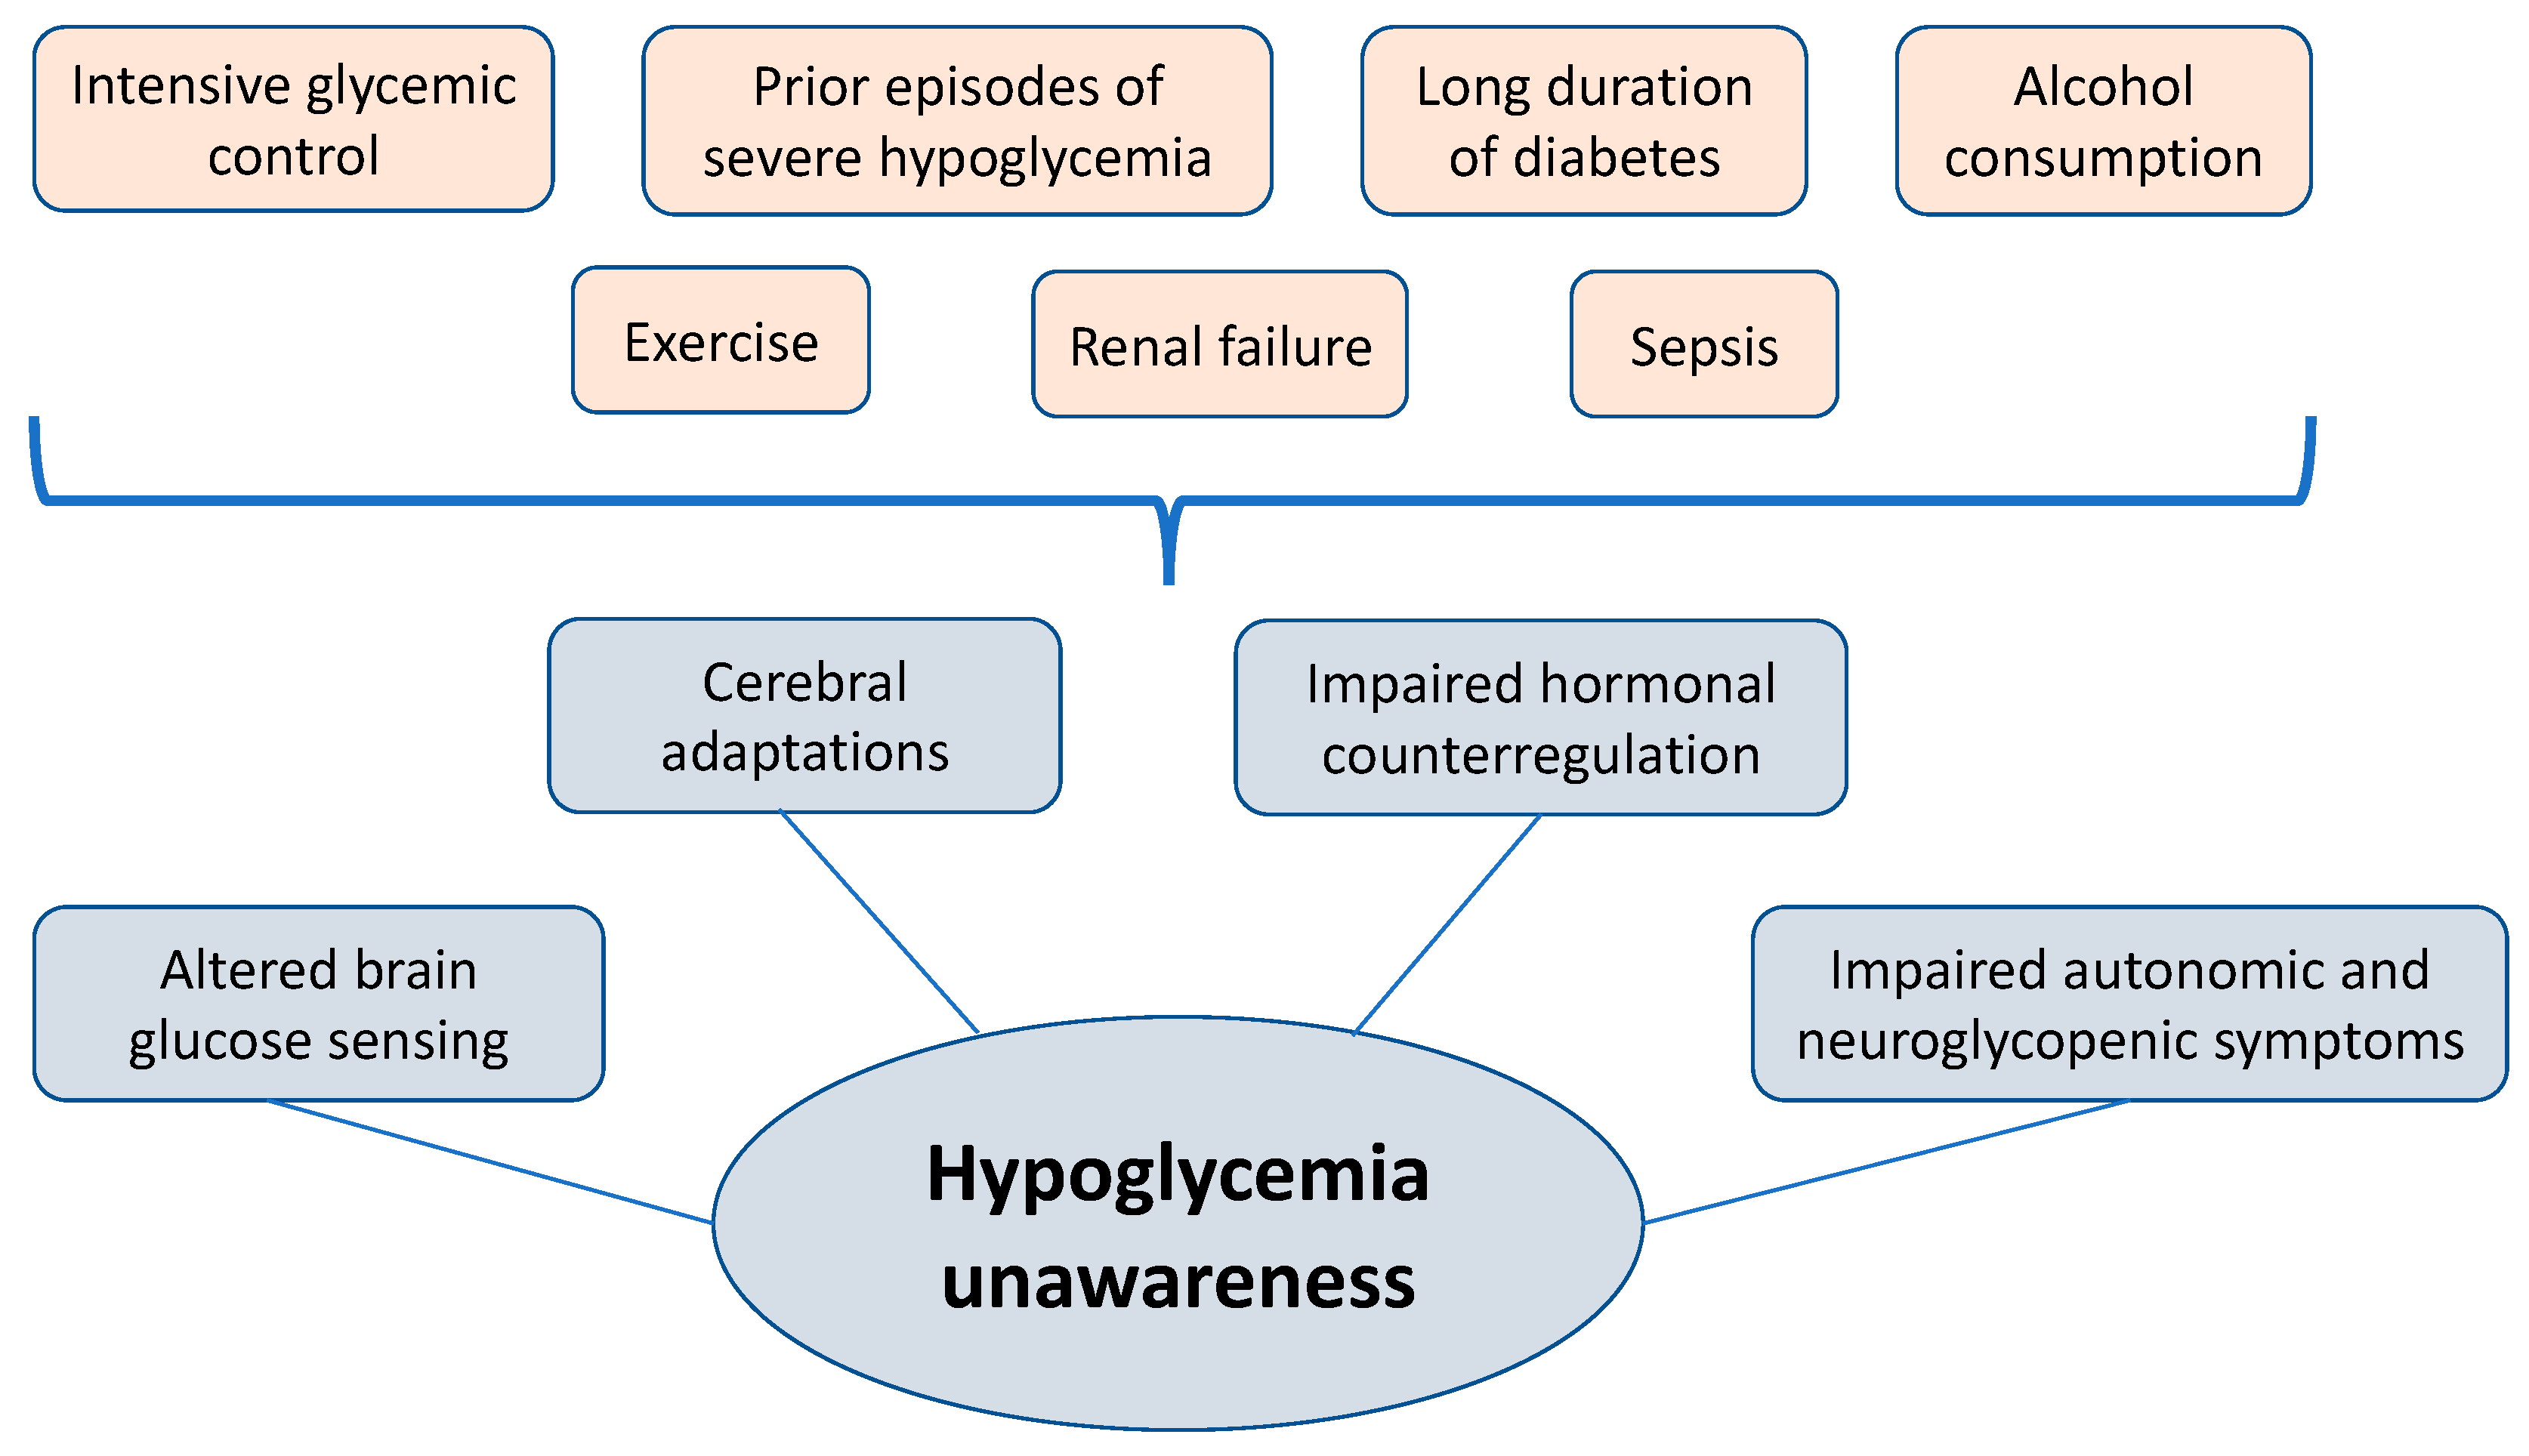 Managing hypoglycemic unawareness